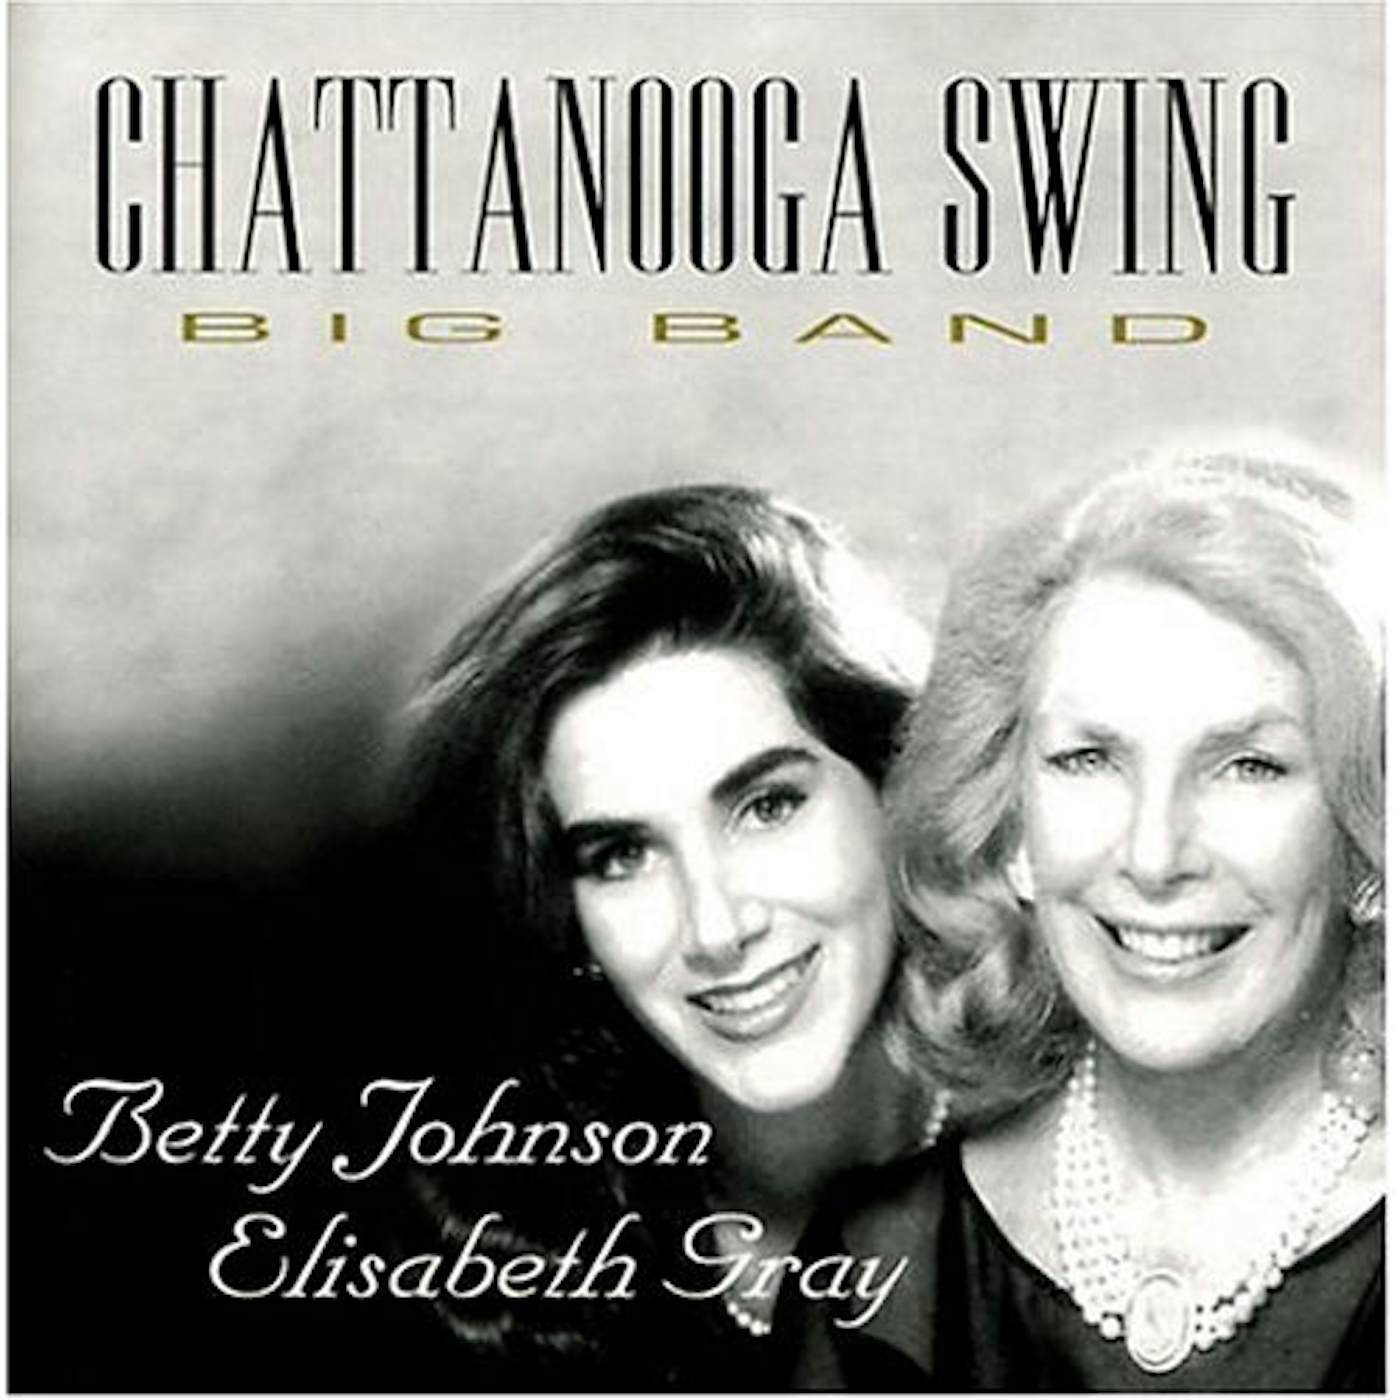 Betty Johnson CHATTANOOGA SWING CD